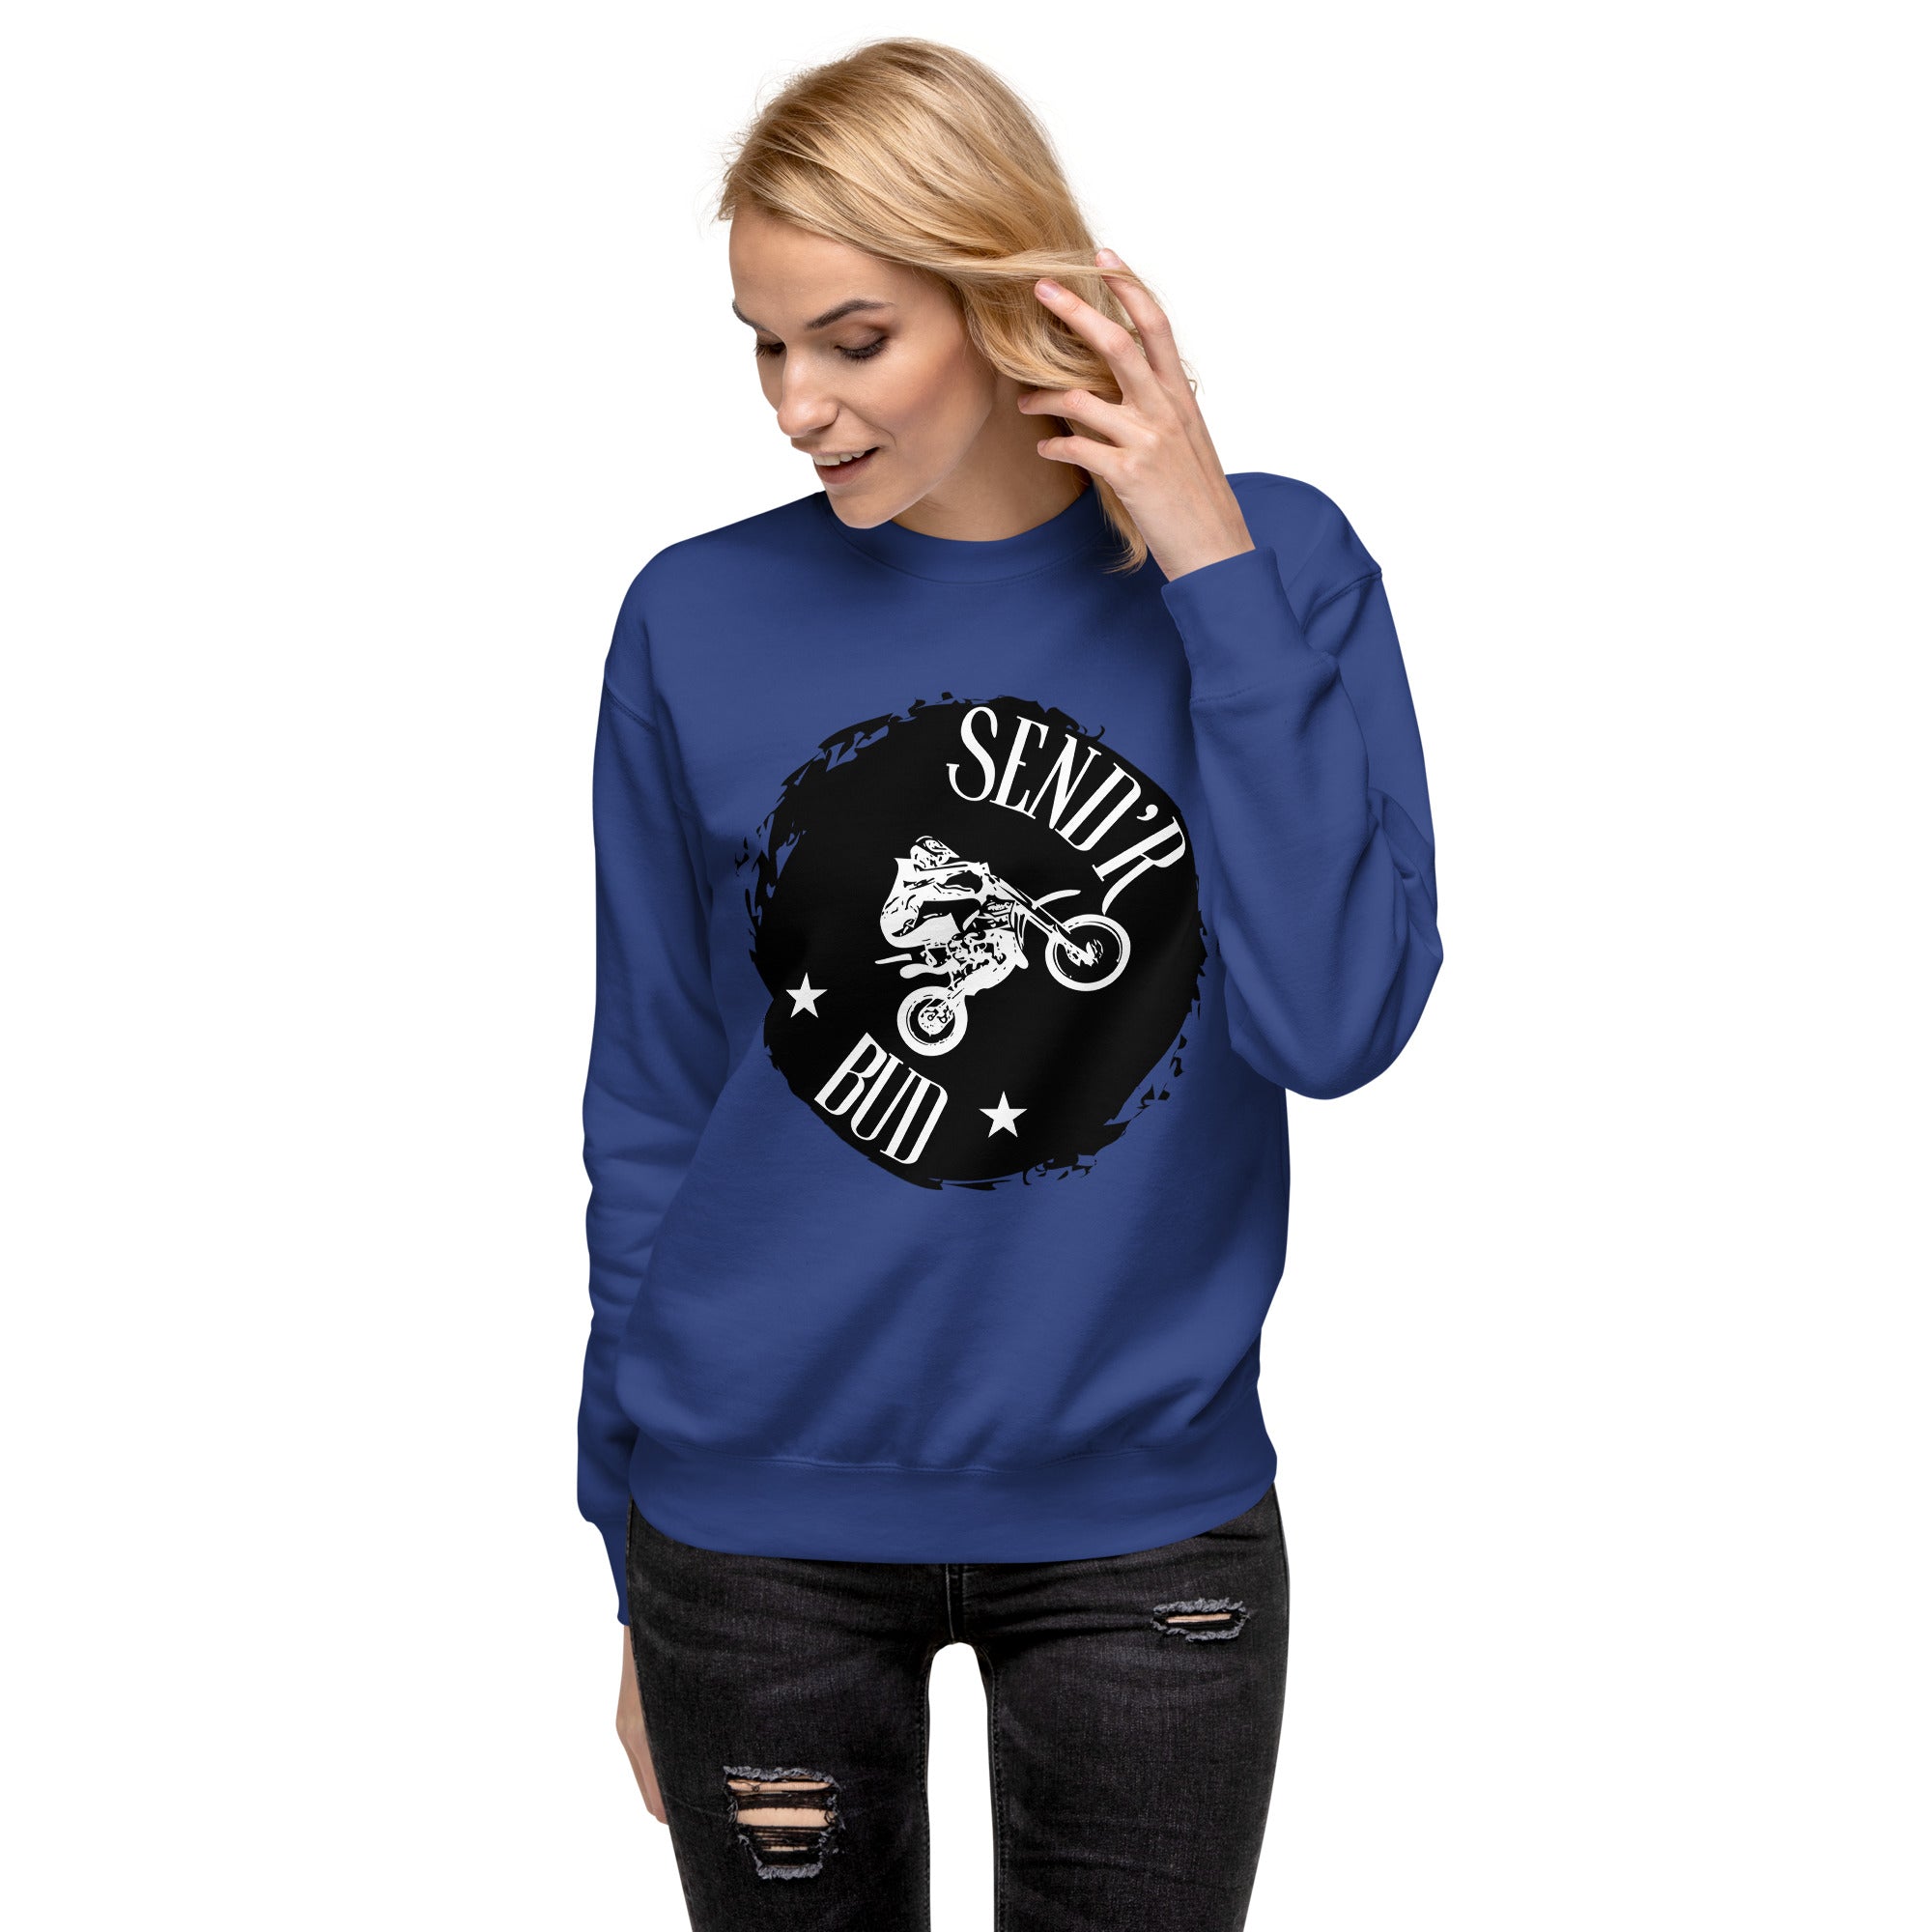 Send'r Bud Women's Premium Sweatshirt